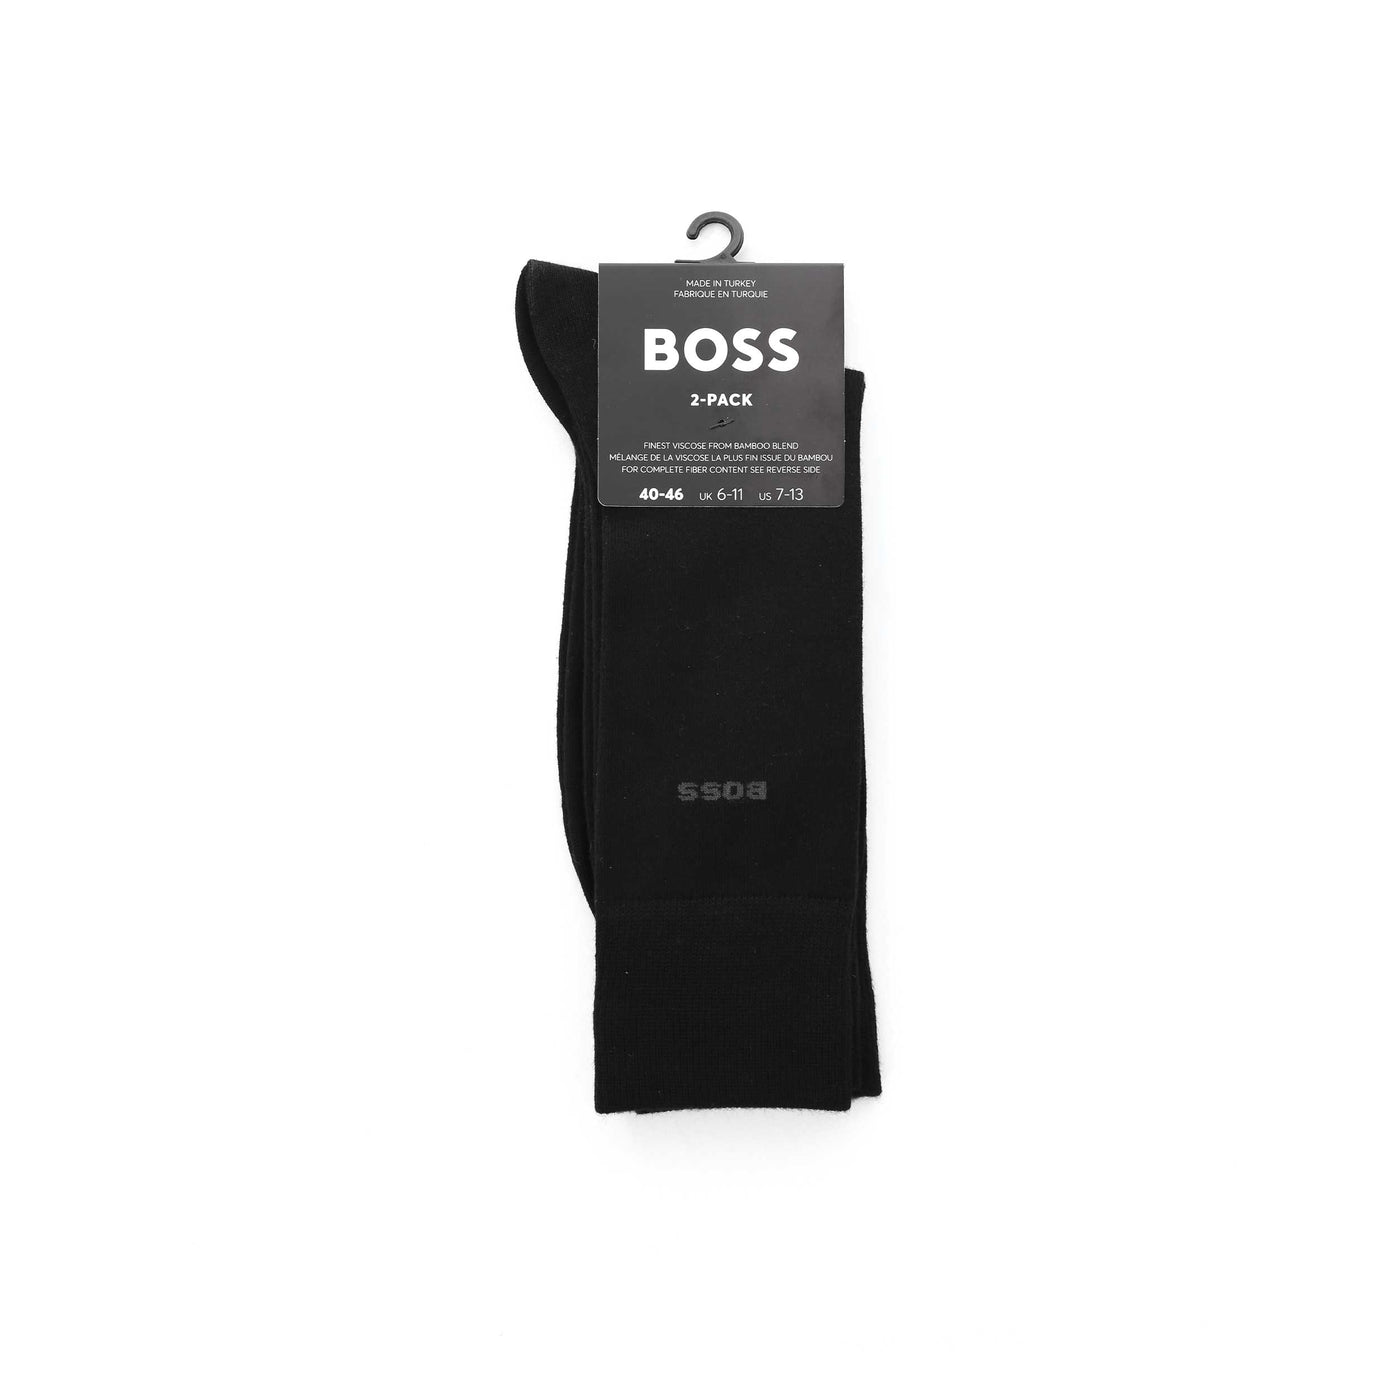 BOSS 2P RS VI Bamboo Sock in Black pack